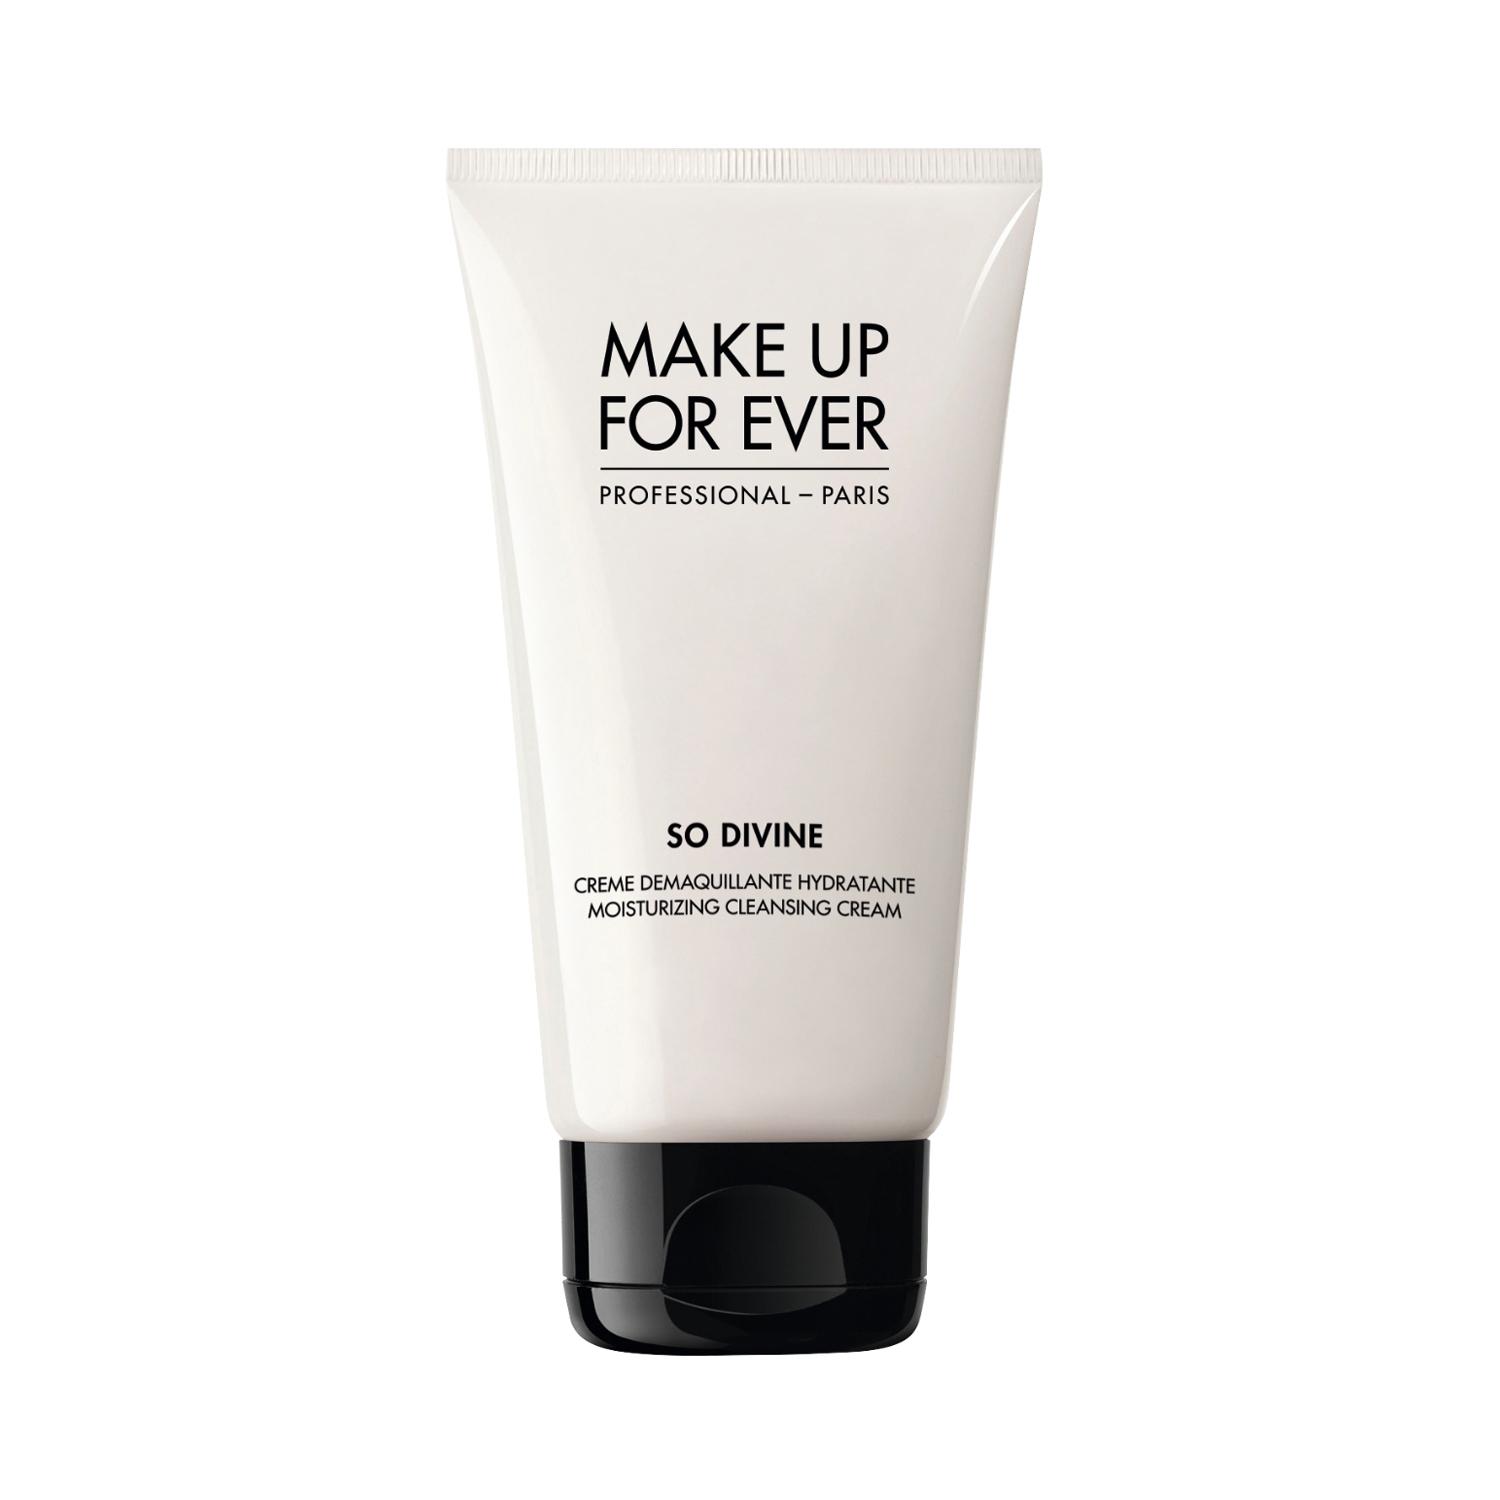 make up for ever so divine moisturizing cleansing cream (150ml)